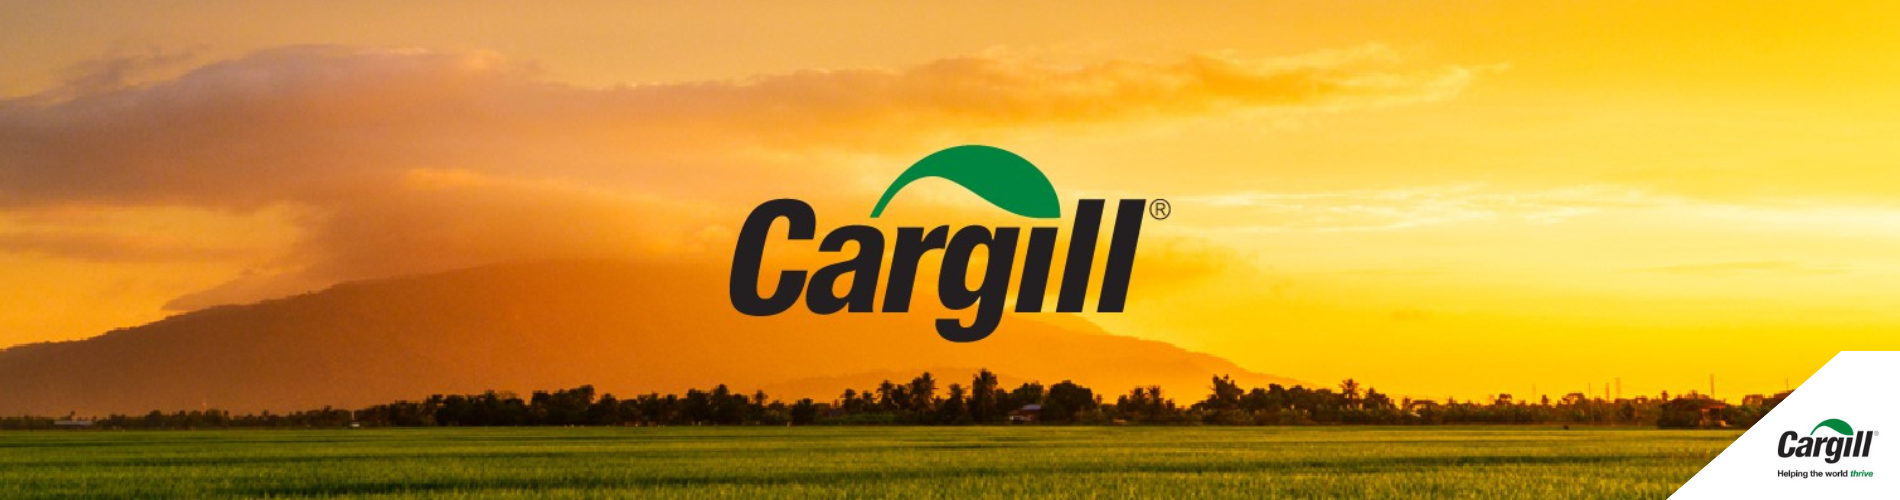 Cargill_banner